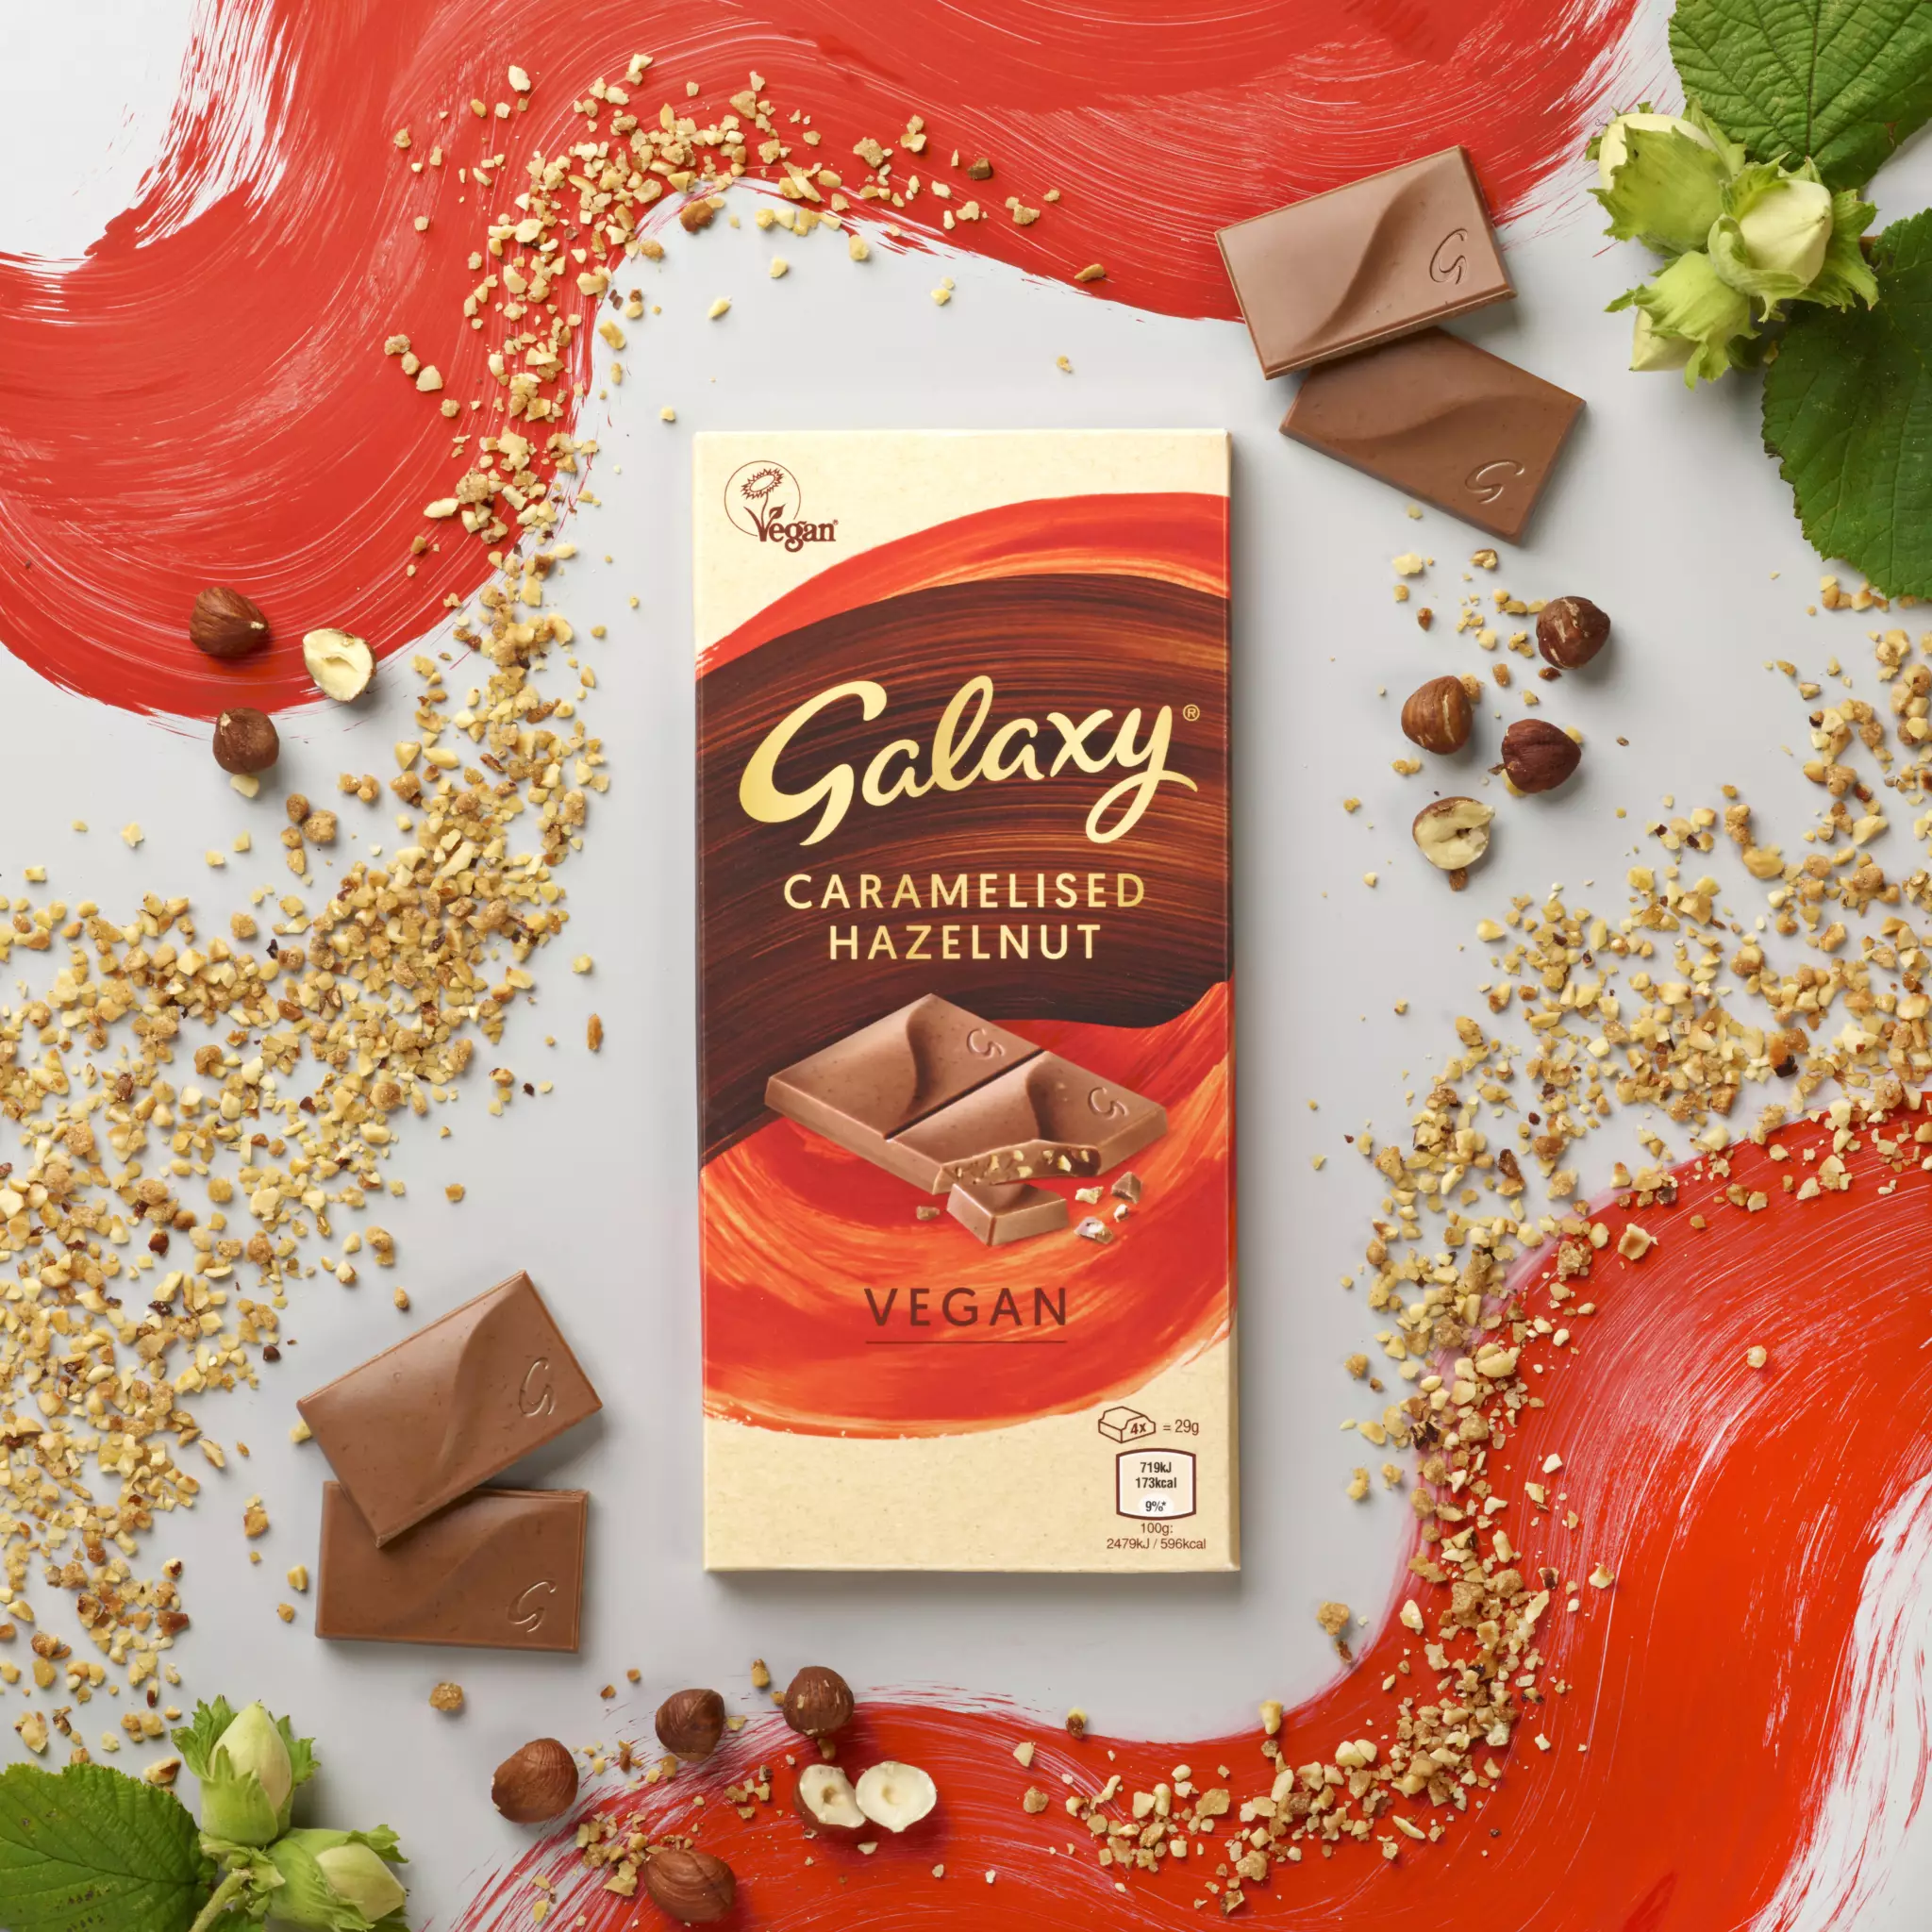 Galaxy are launching their first vegan chocolate bar. (